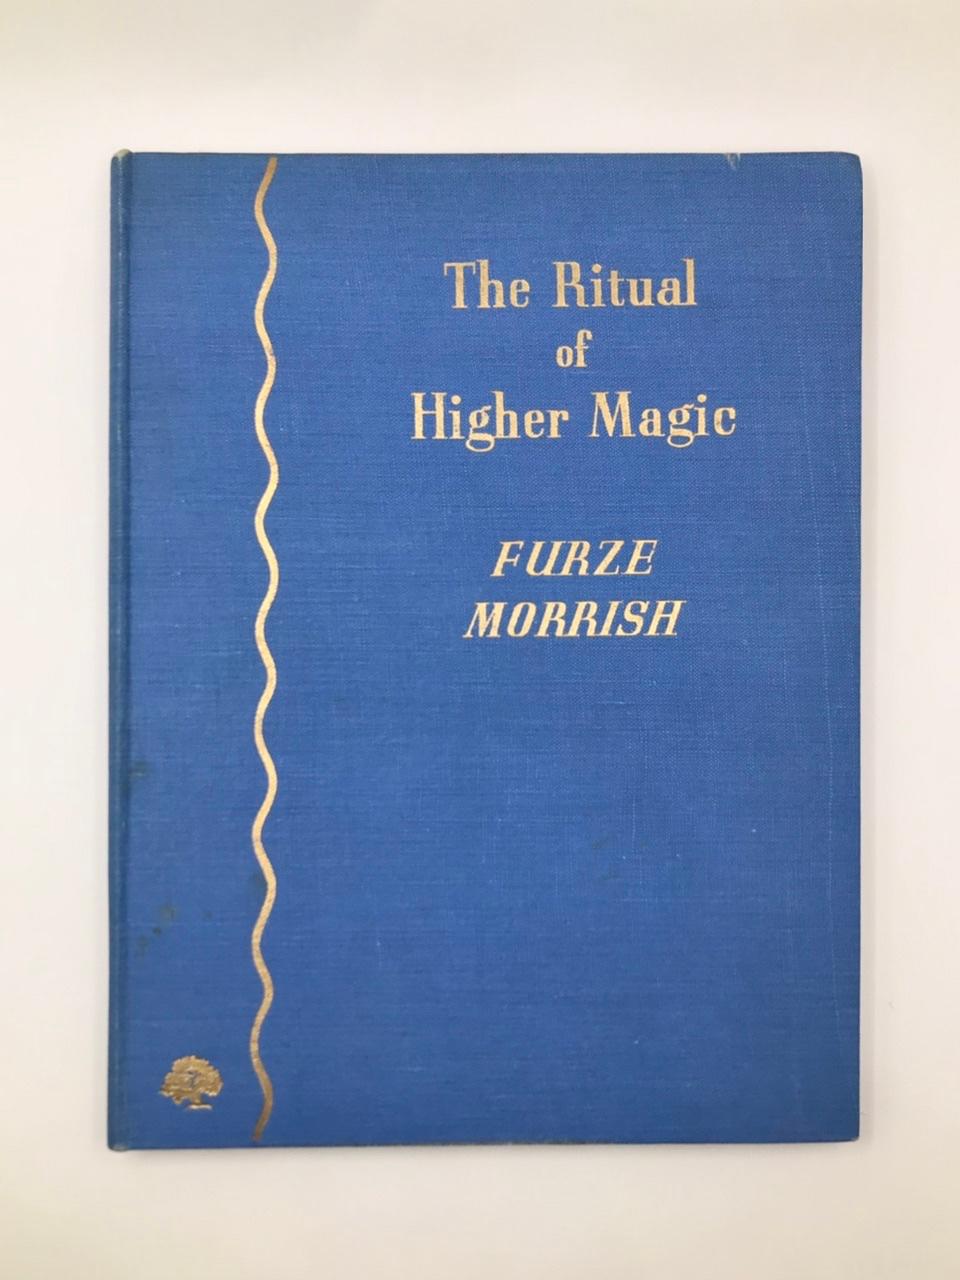 The Ritual of Higher Magic by Furze Morrish